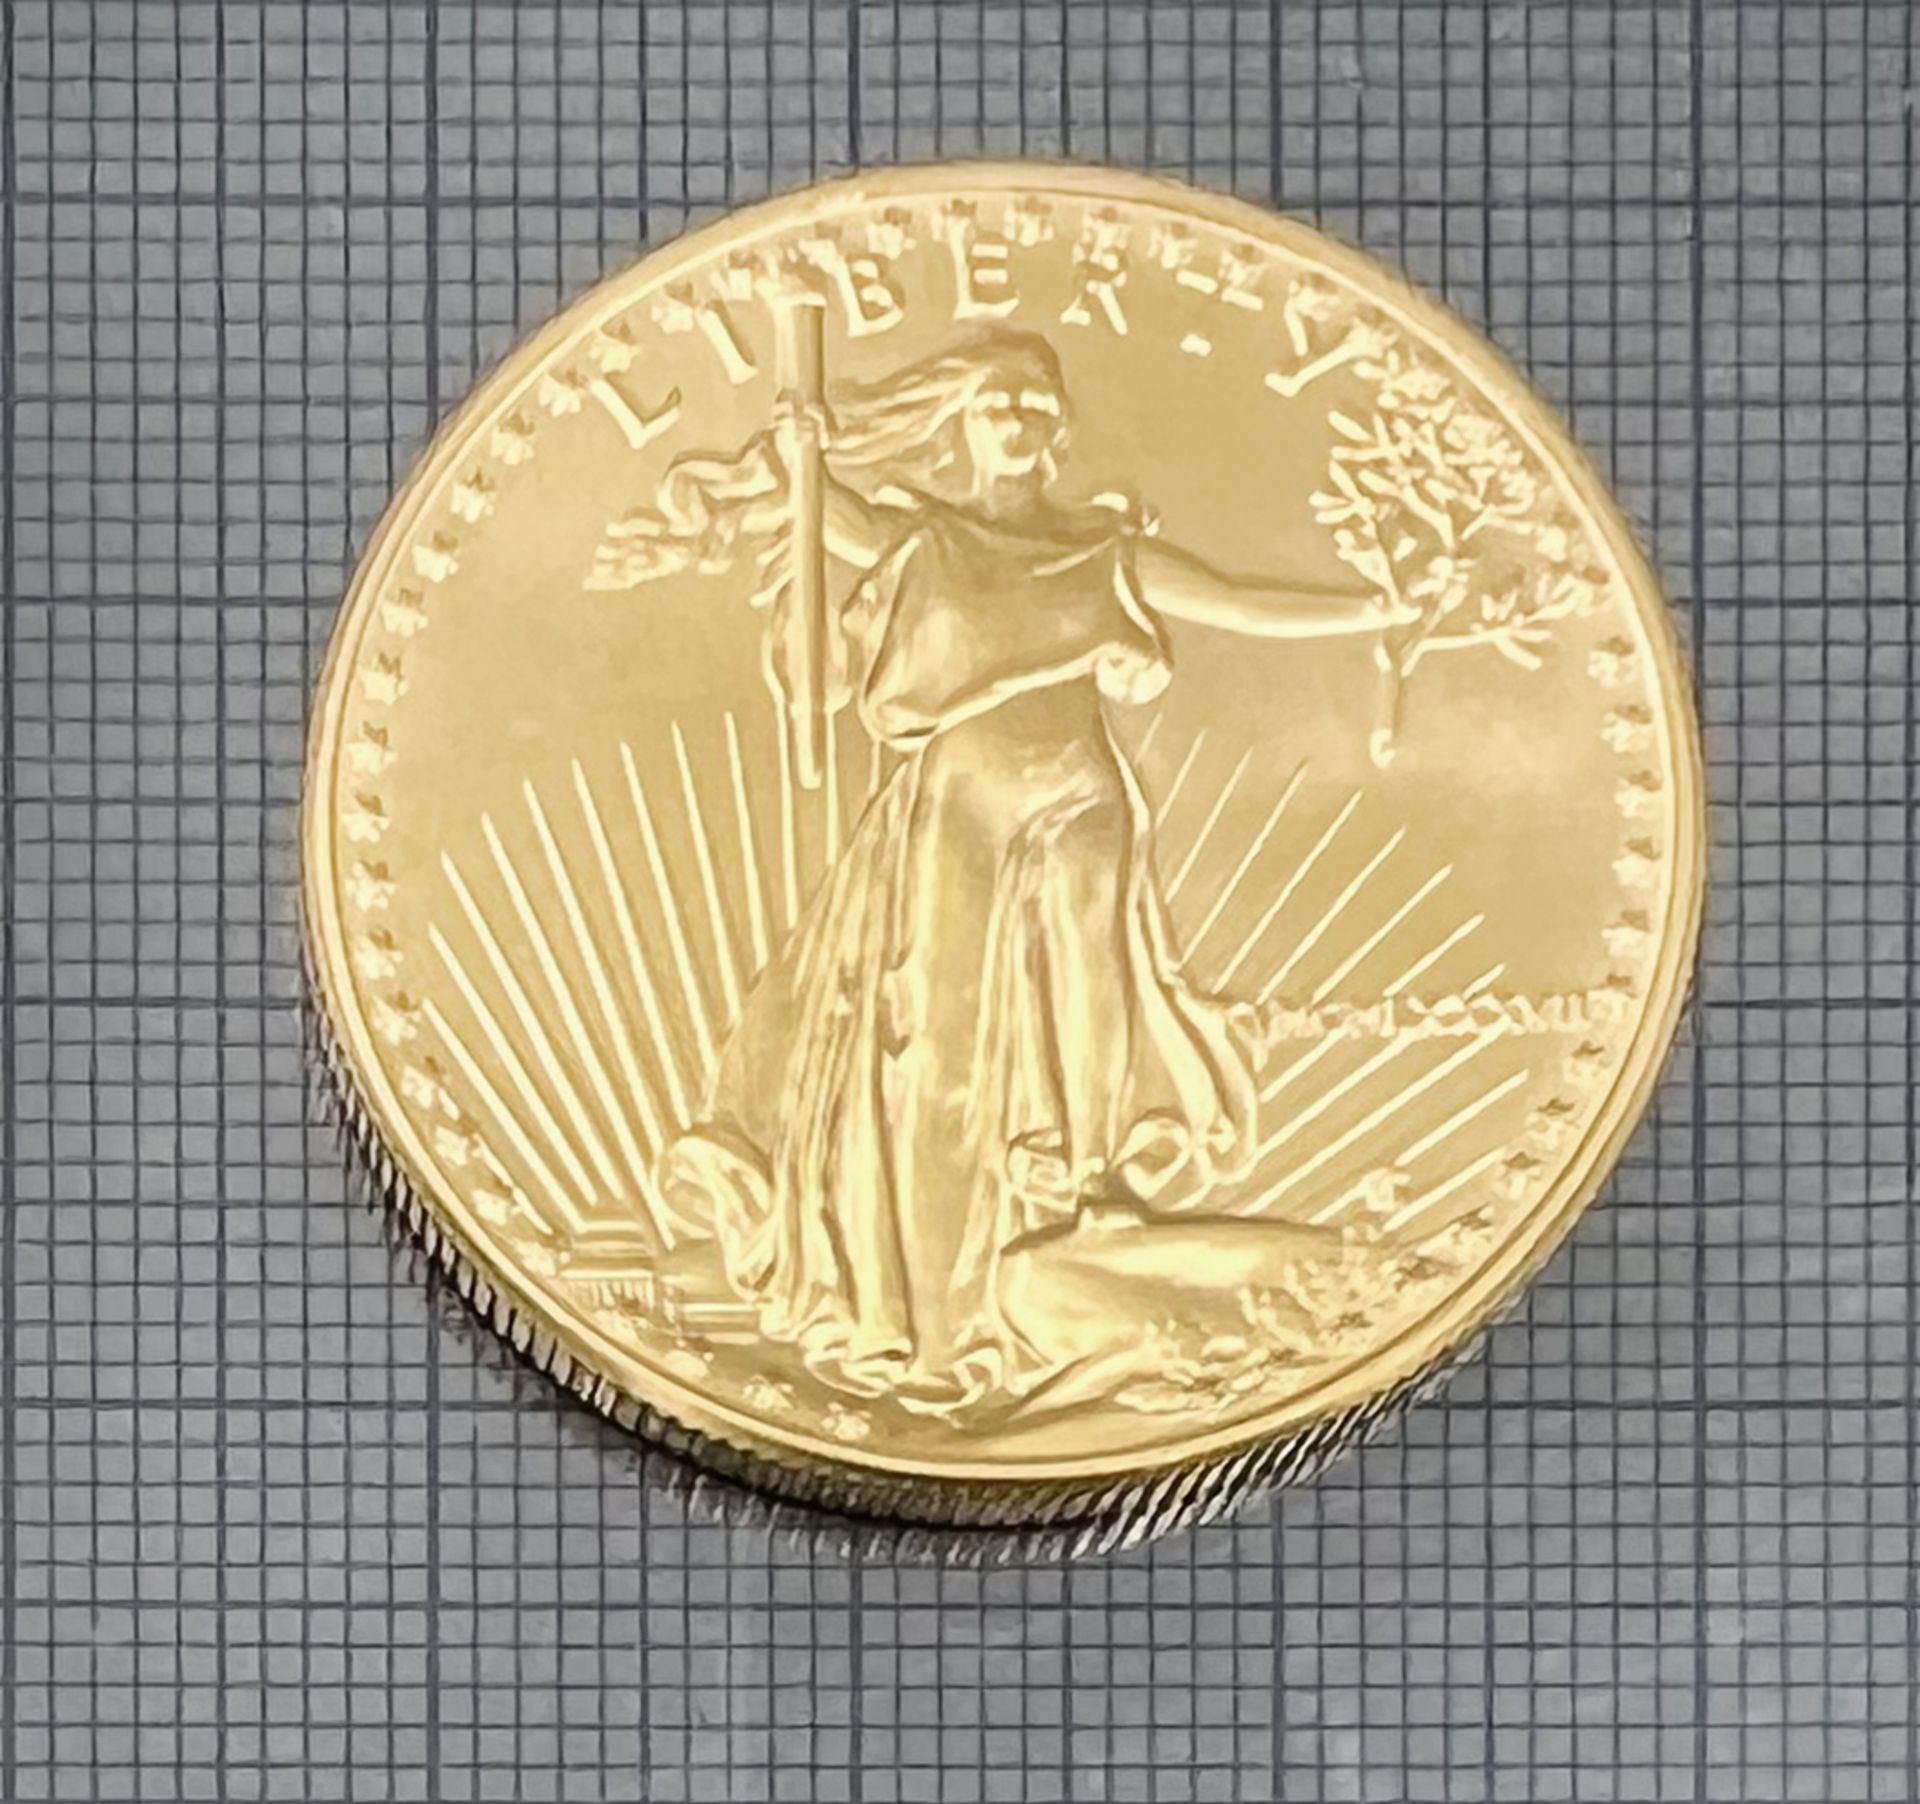 Goldmünze 50 Dollars "Liberty". USA 1987. - Bild 5 aus 5